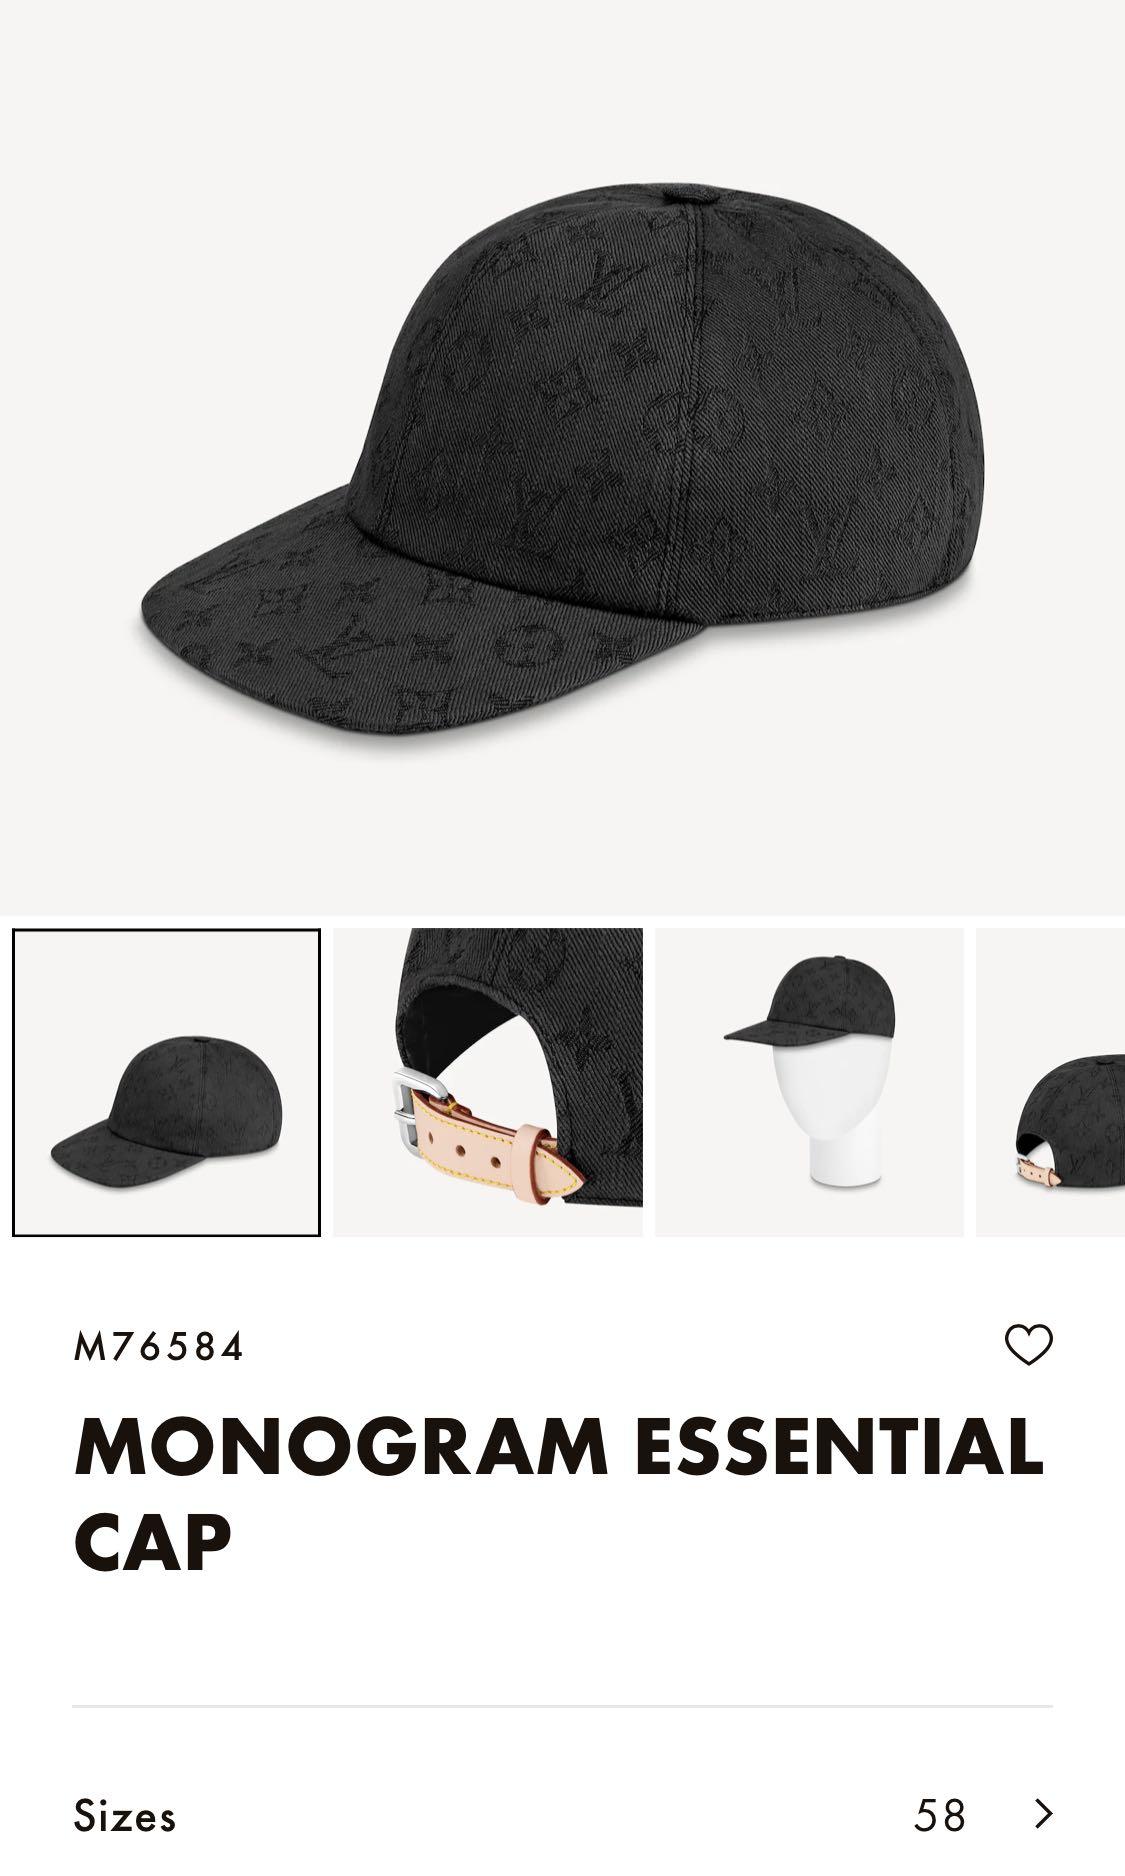 Louis Vuitton Monogram Essential Cap - For Sale on 1stDibs